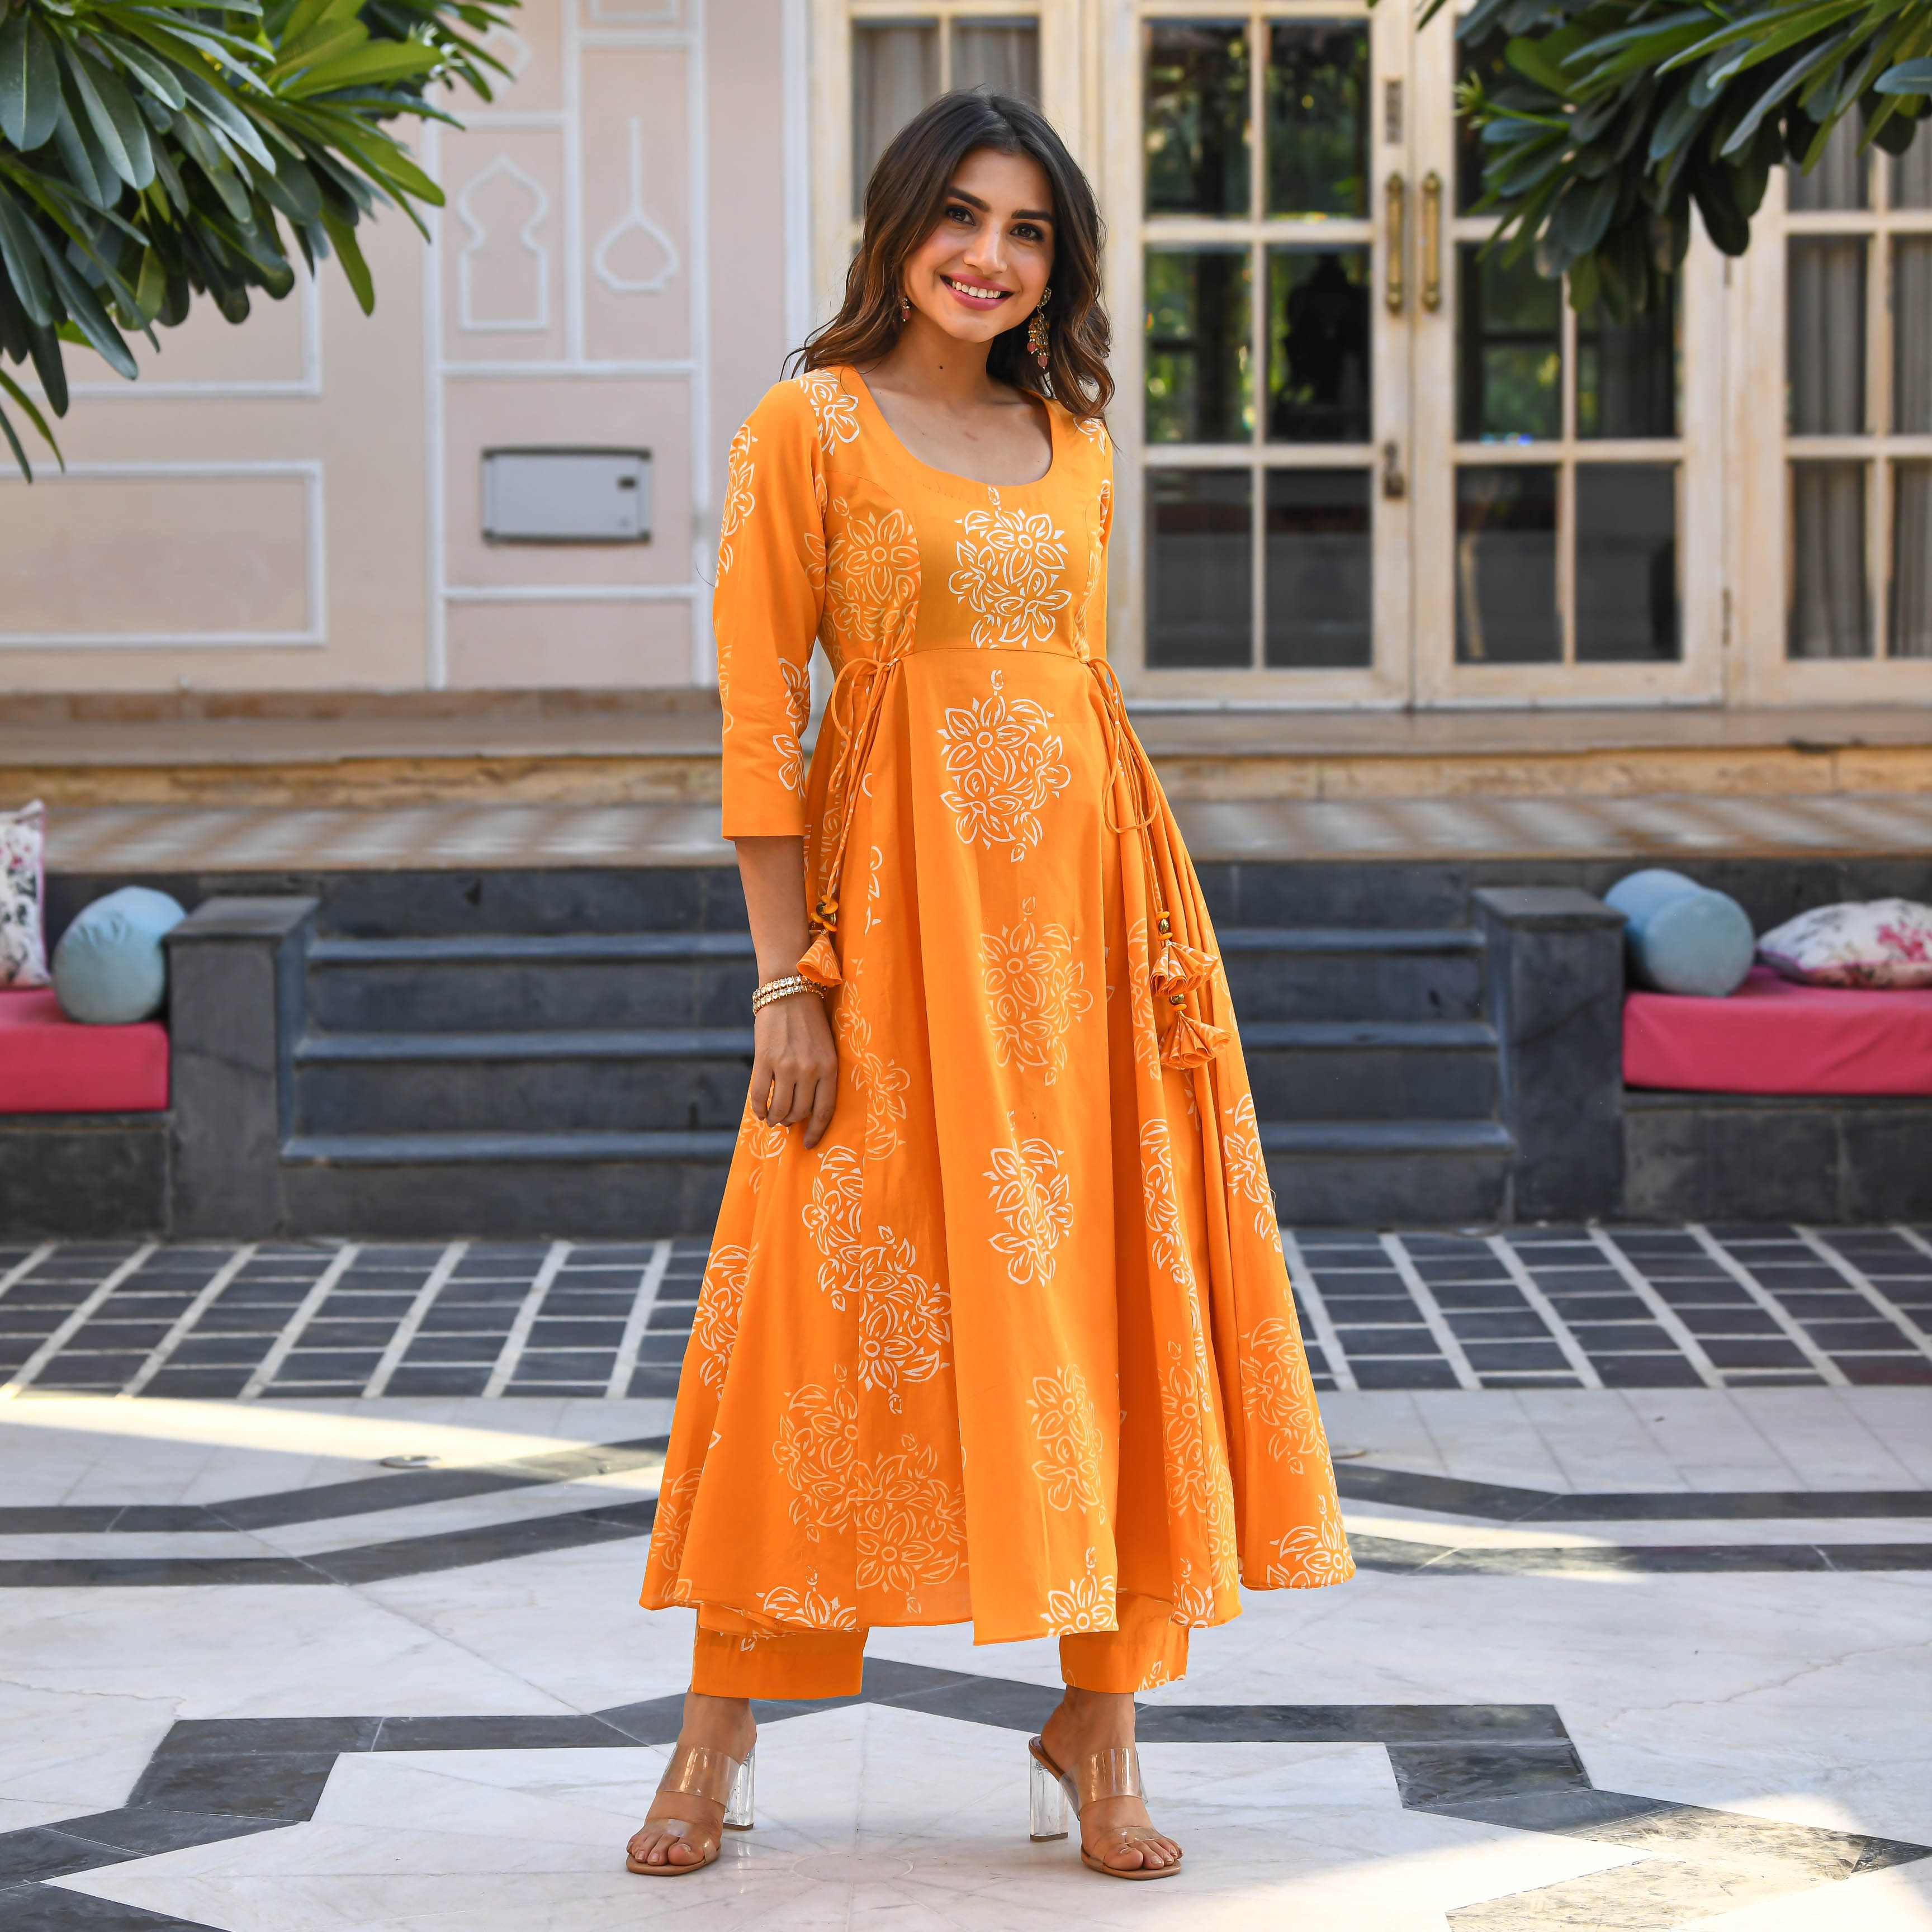 Orange Kurta - Buy Orange Kurta Online Starting at Just ₹122 | Meesho